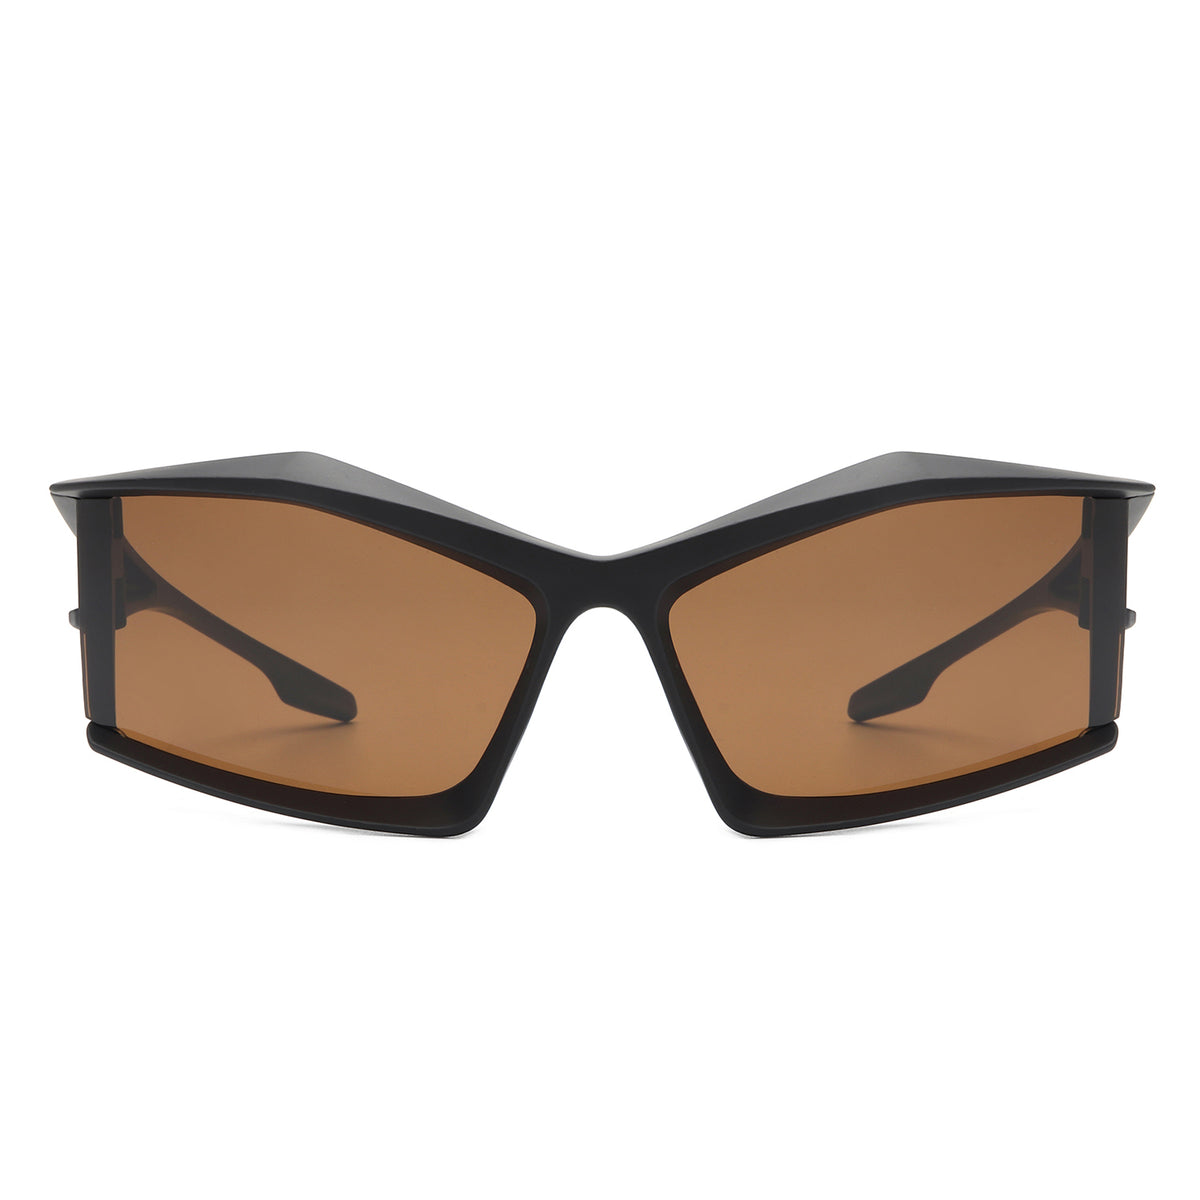 2019 Super Futuristic Oversize Shield Visor Sunglasses Flat Top